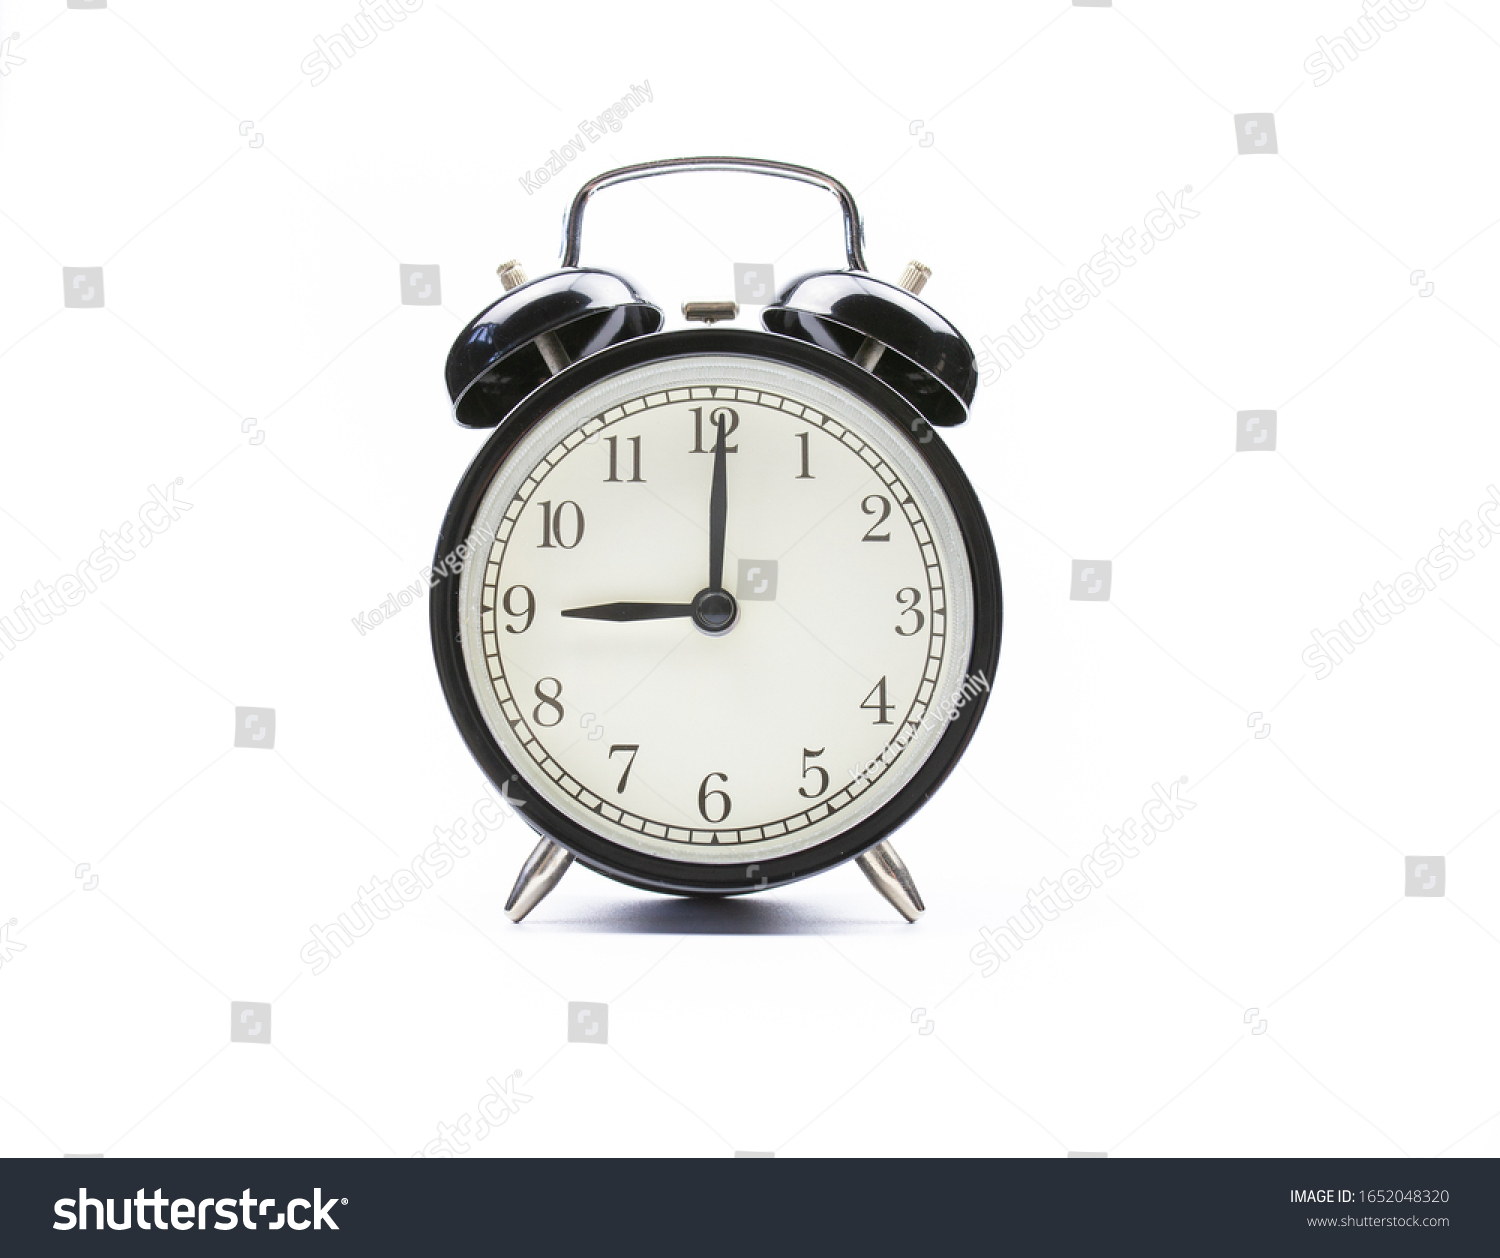 Black vintage alarm clock on a white background shows nine o'clock #1652048320